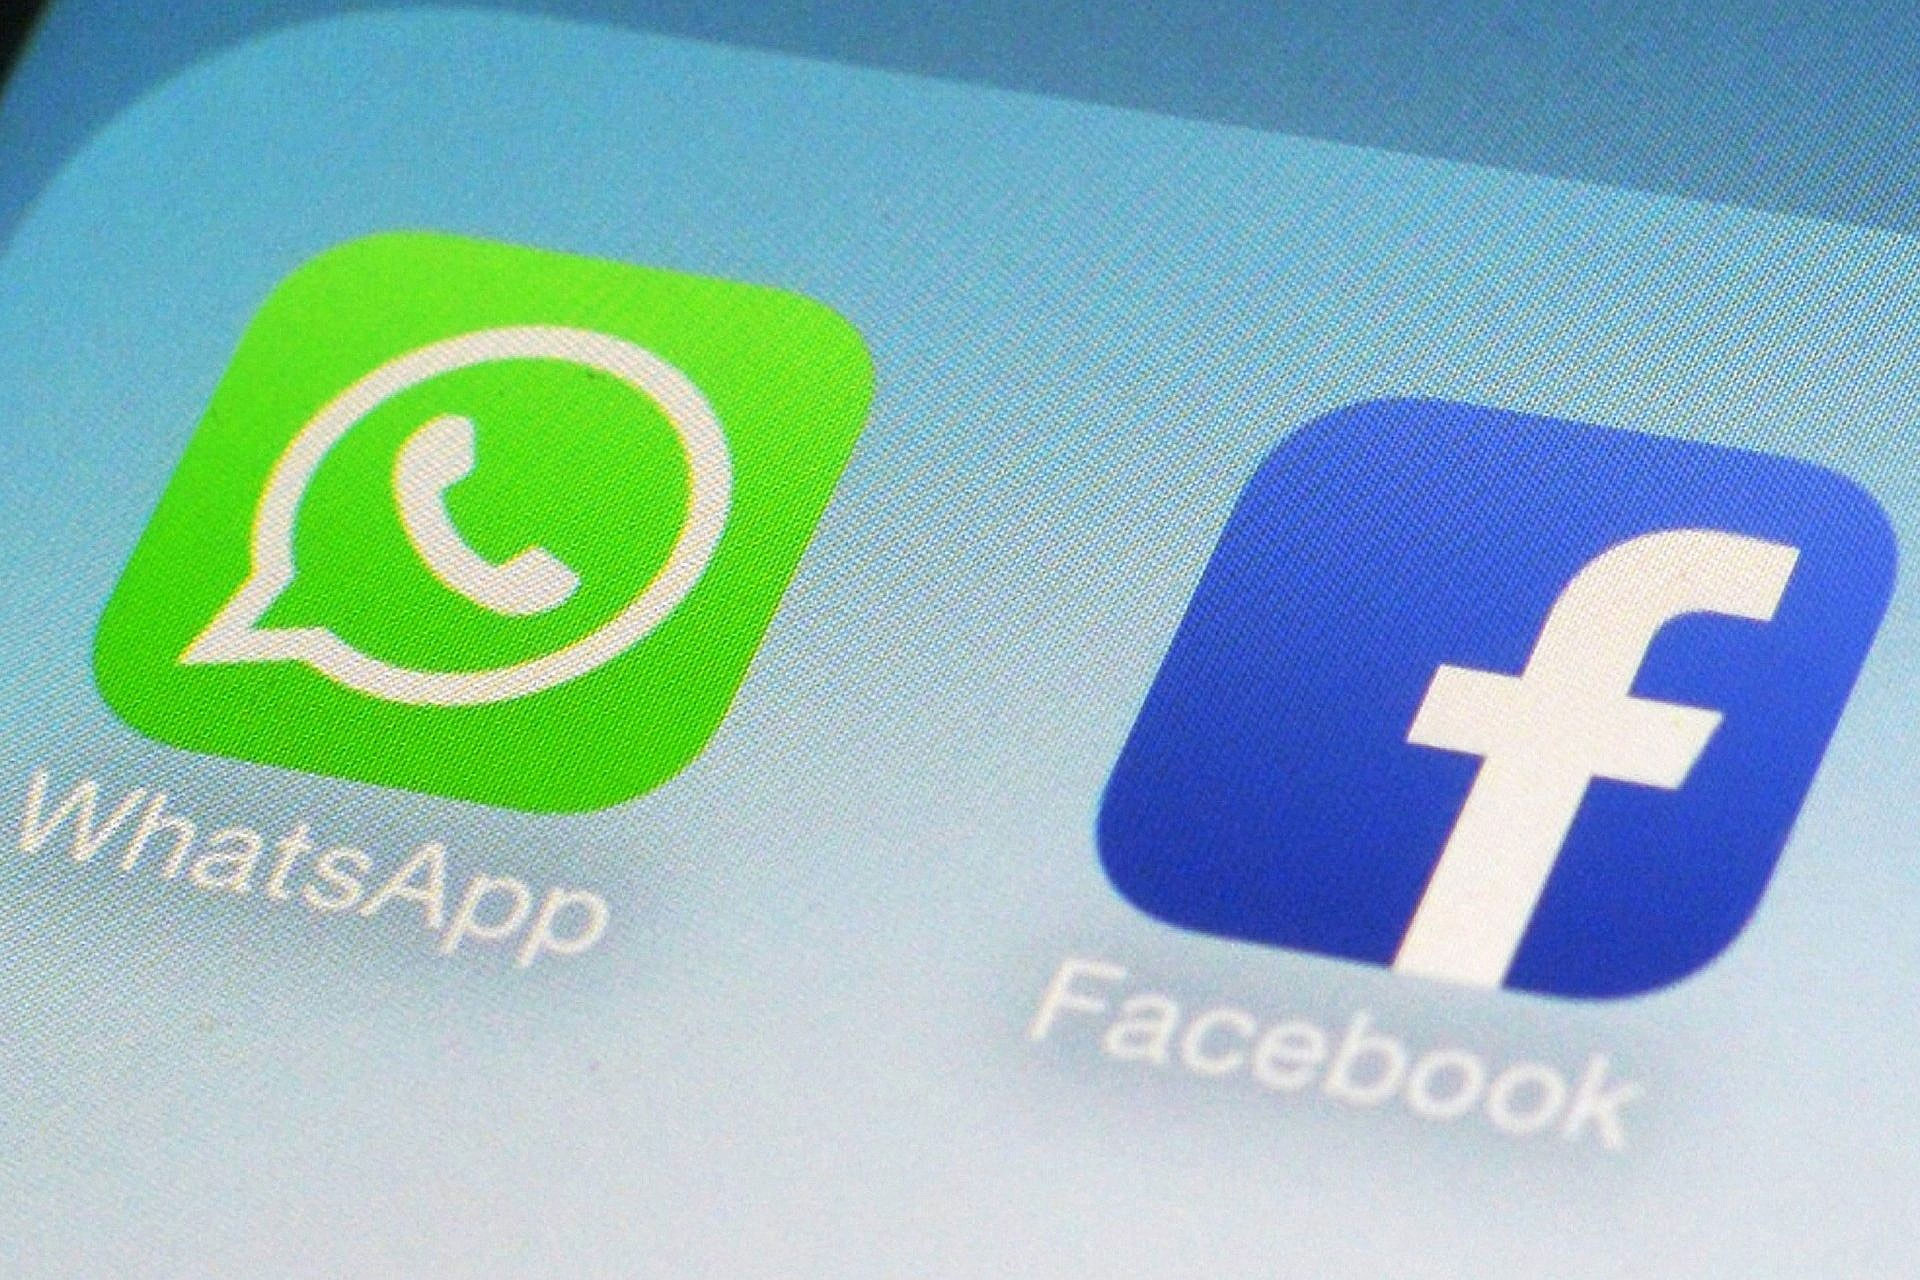 WhatsApp-ը հերքում է գերմանական իշխանությունների մեղադրանքները՝ օգտատերերի տվյալները Facebook-ին փոխանցելու վերաբերյալ